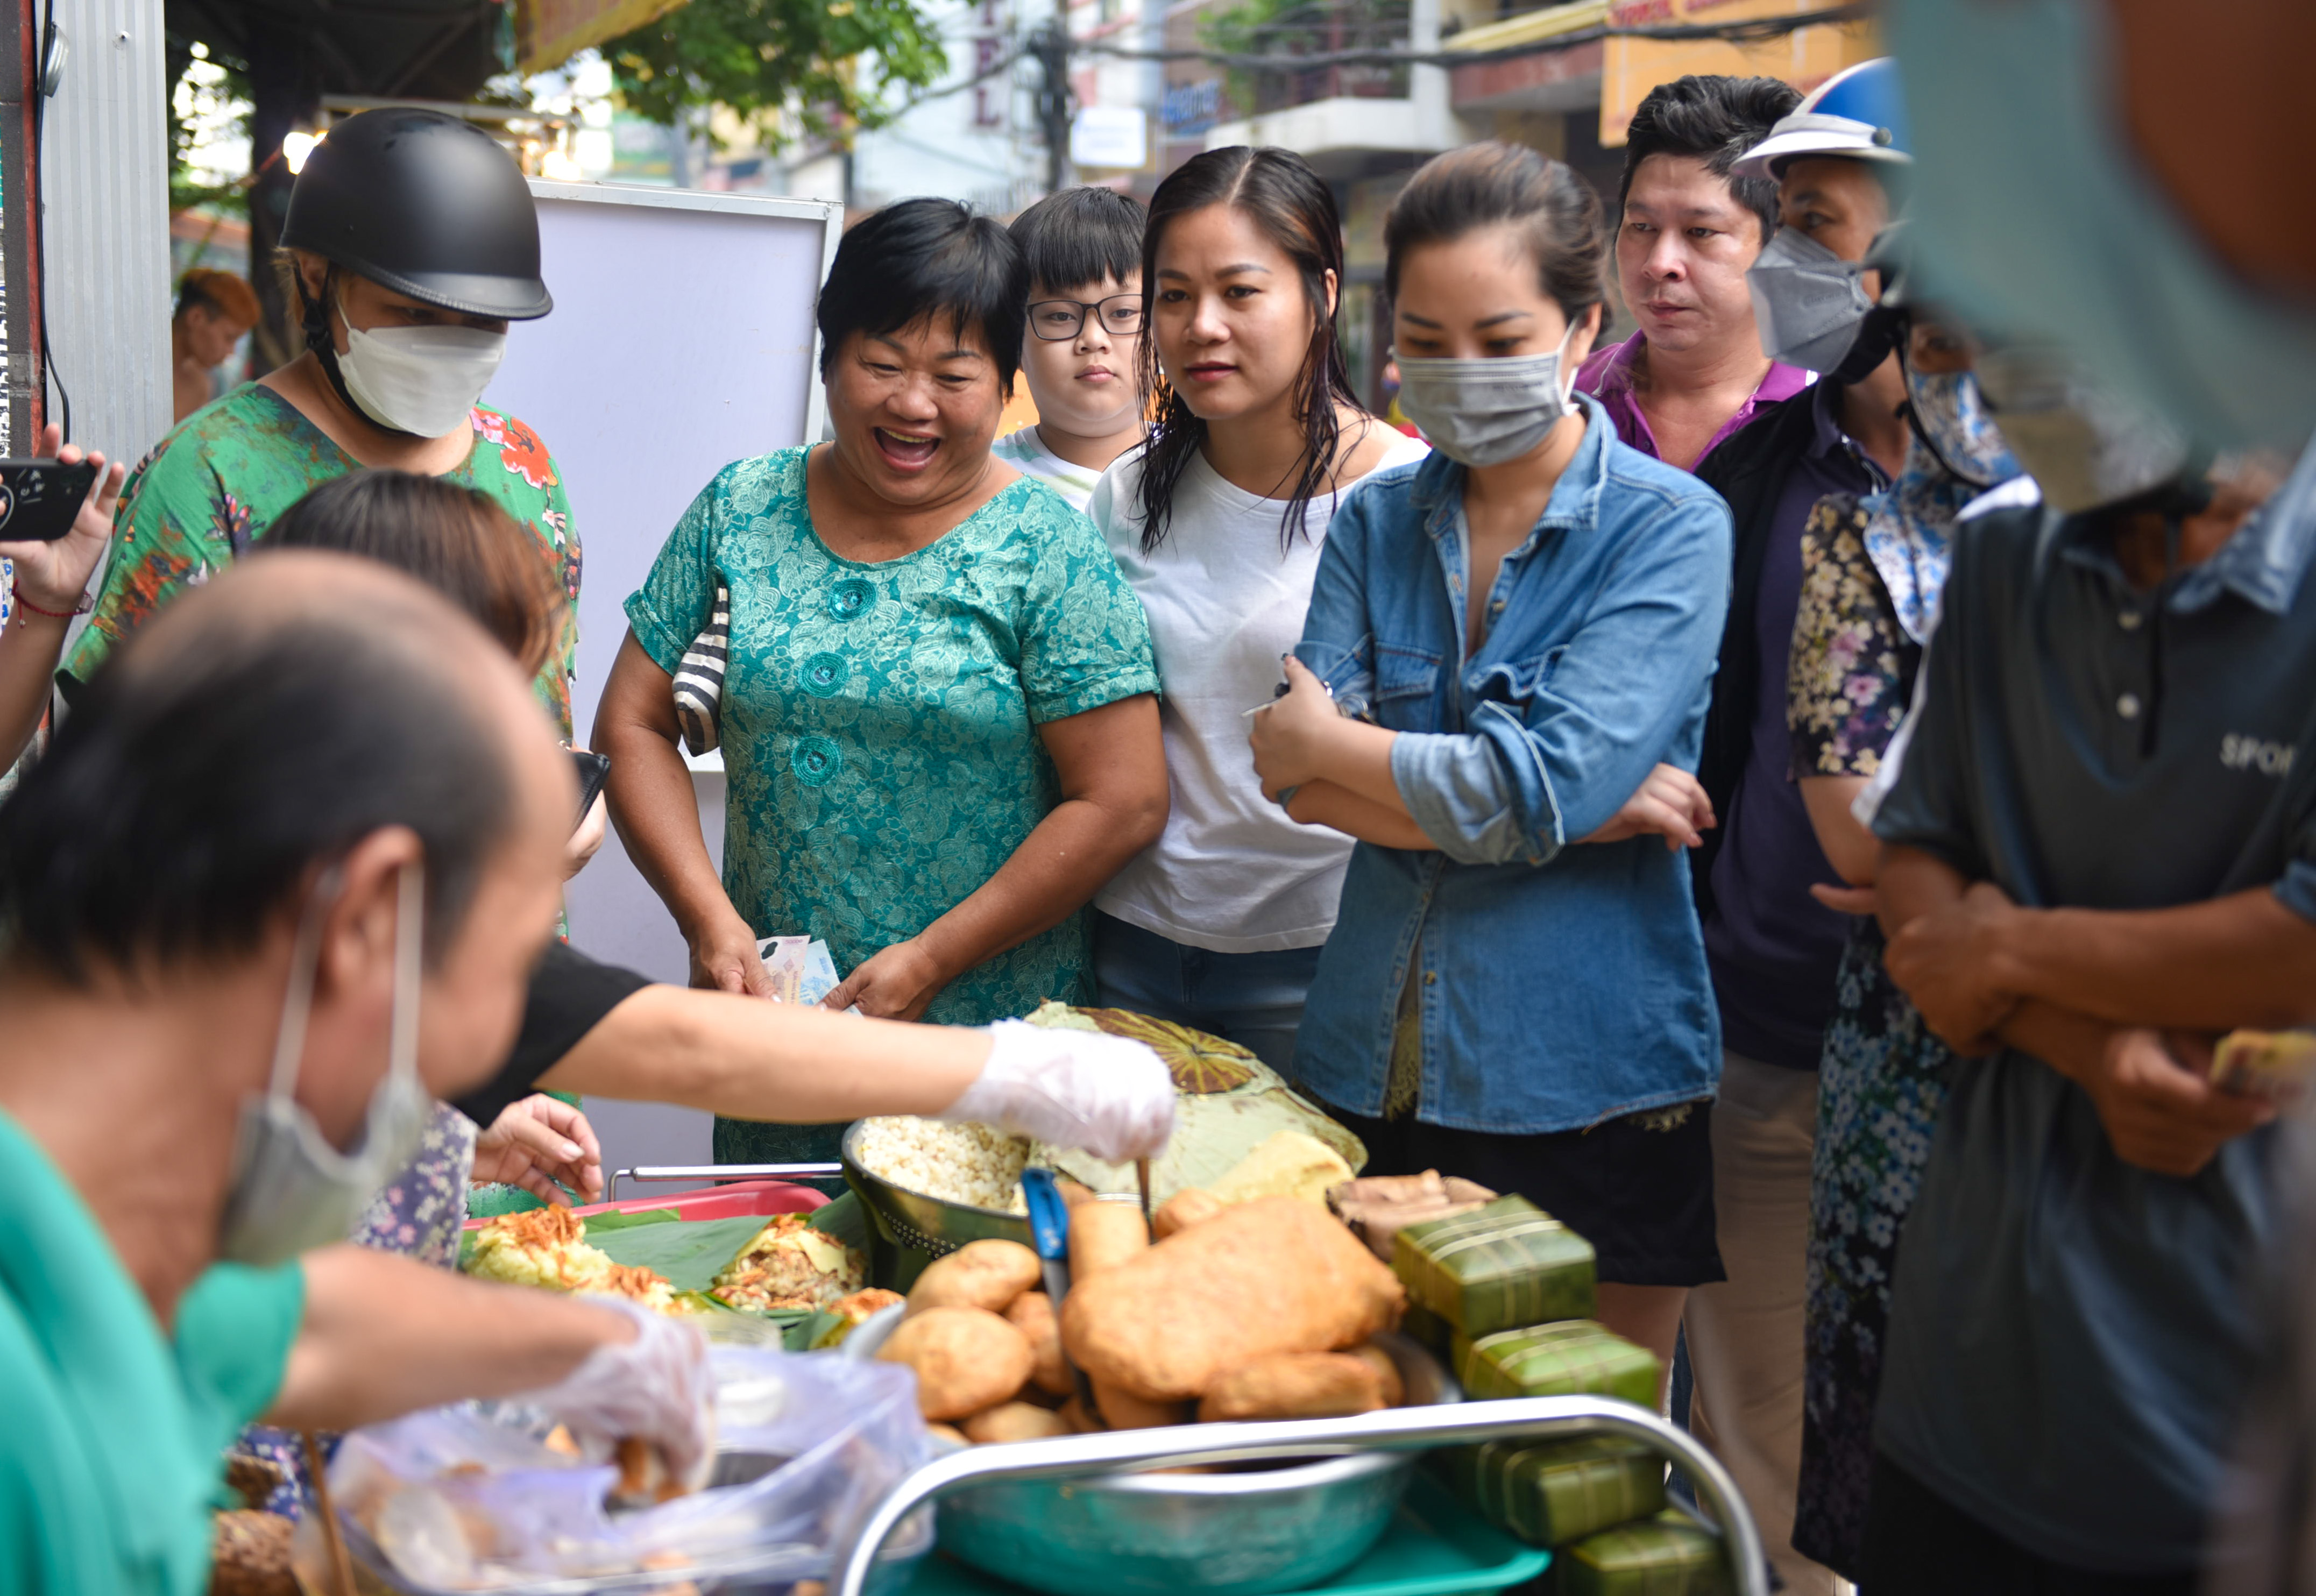 People await a plate of sticky rice at Hanh’s stall at 35 Ngo Thi Thu Minh, Ward 2, Tan Binh District, Ho Chi Minh City. Photo: Ngoc Phuong / Tuoi Tre News